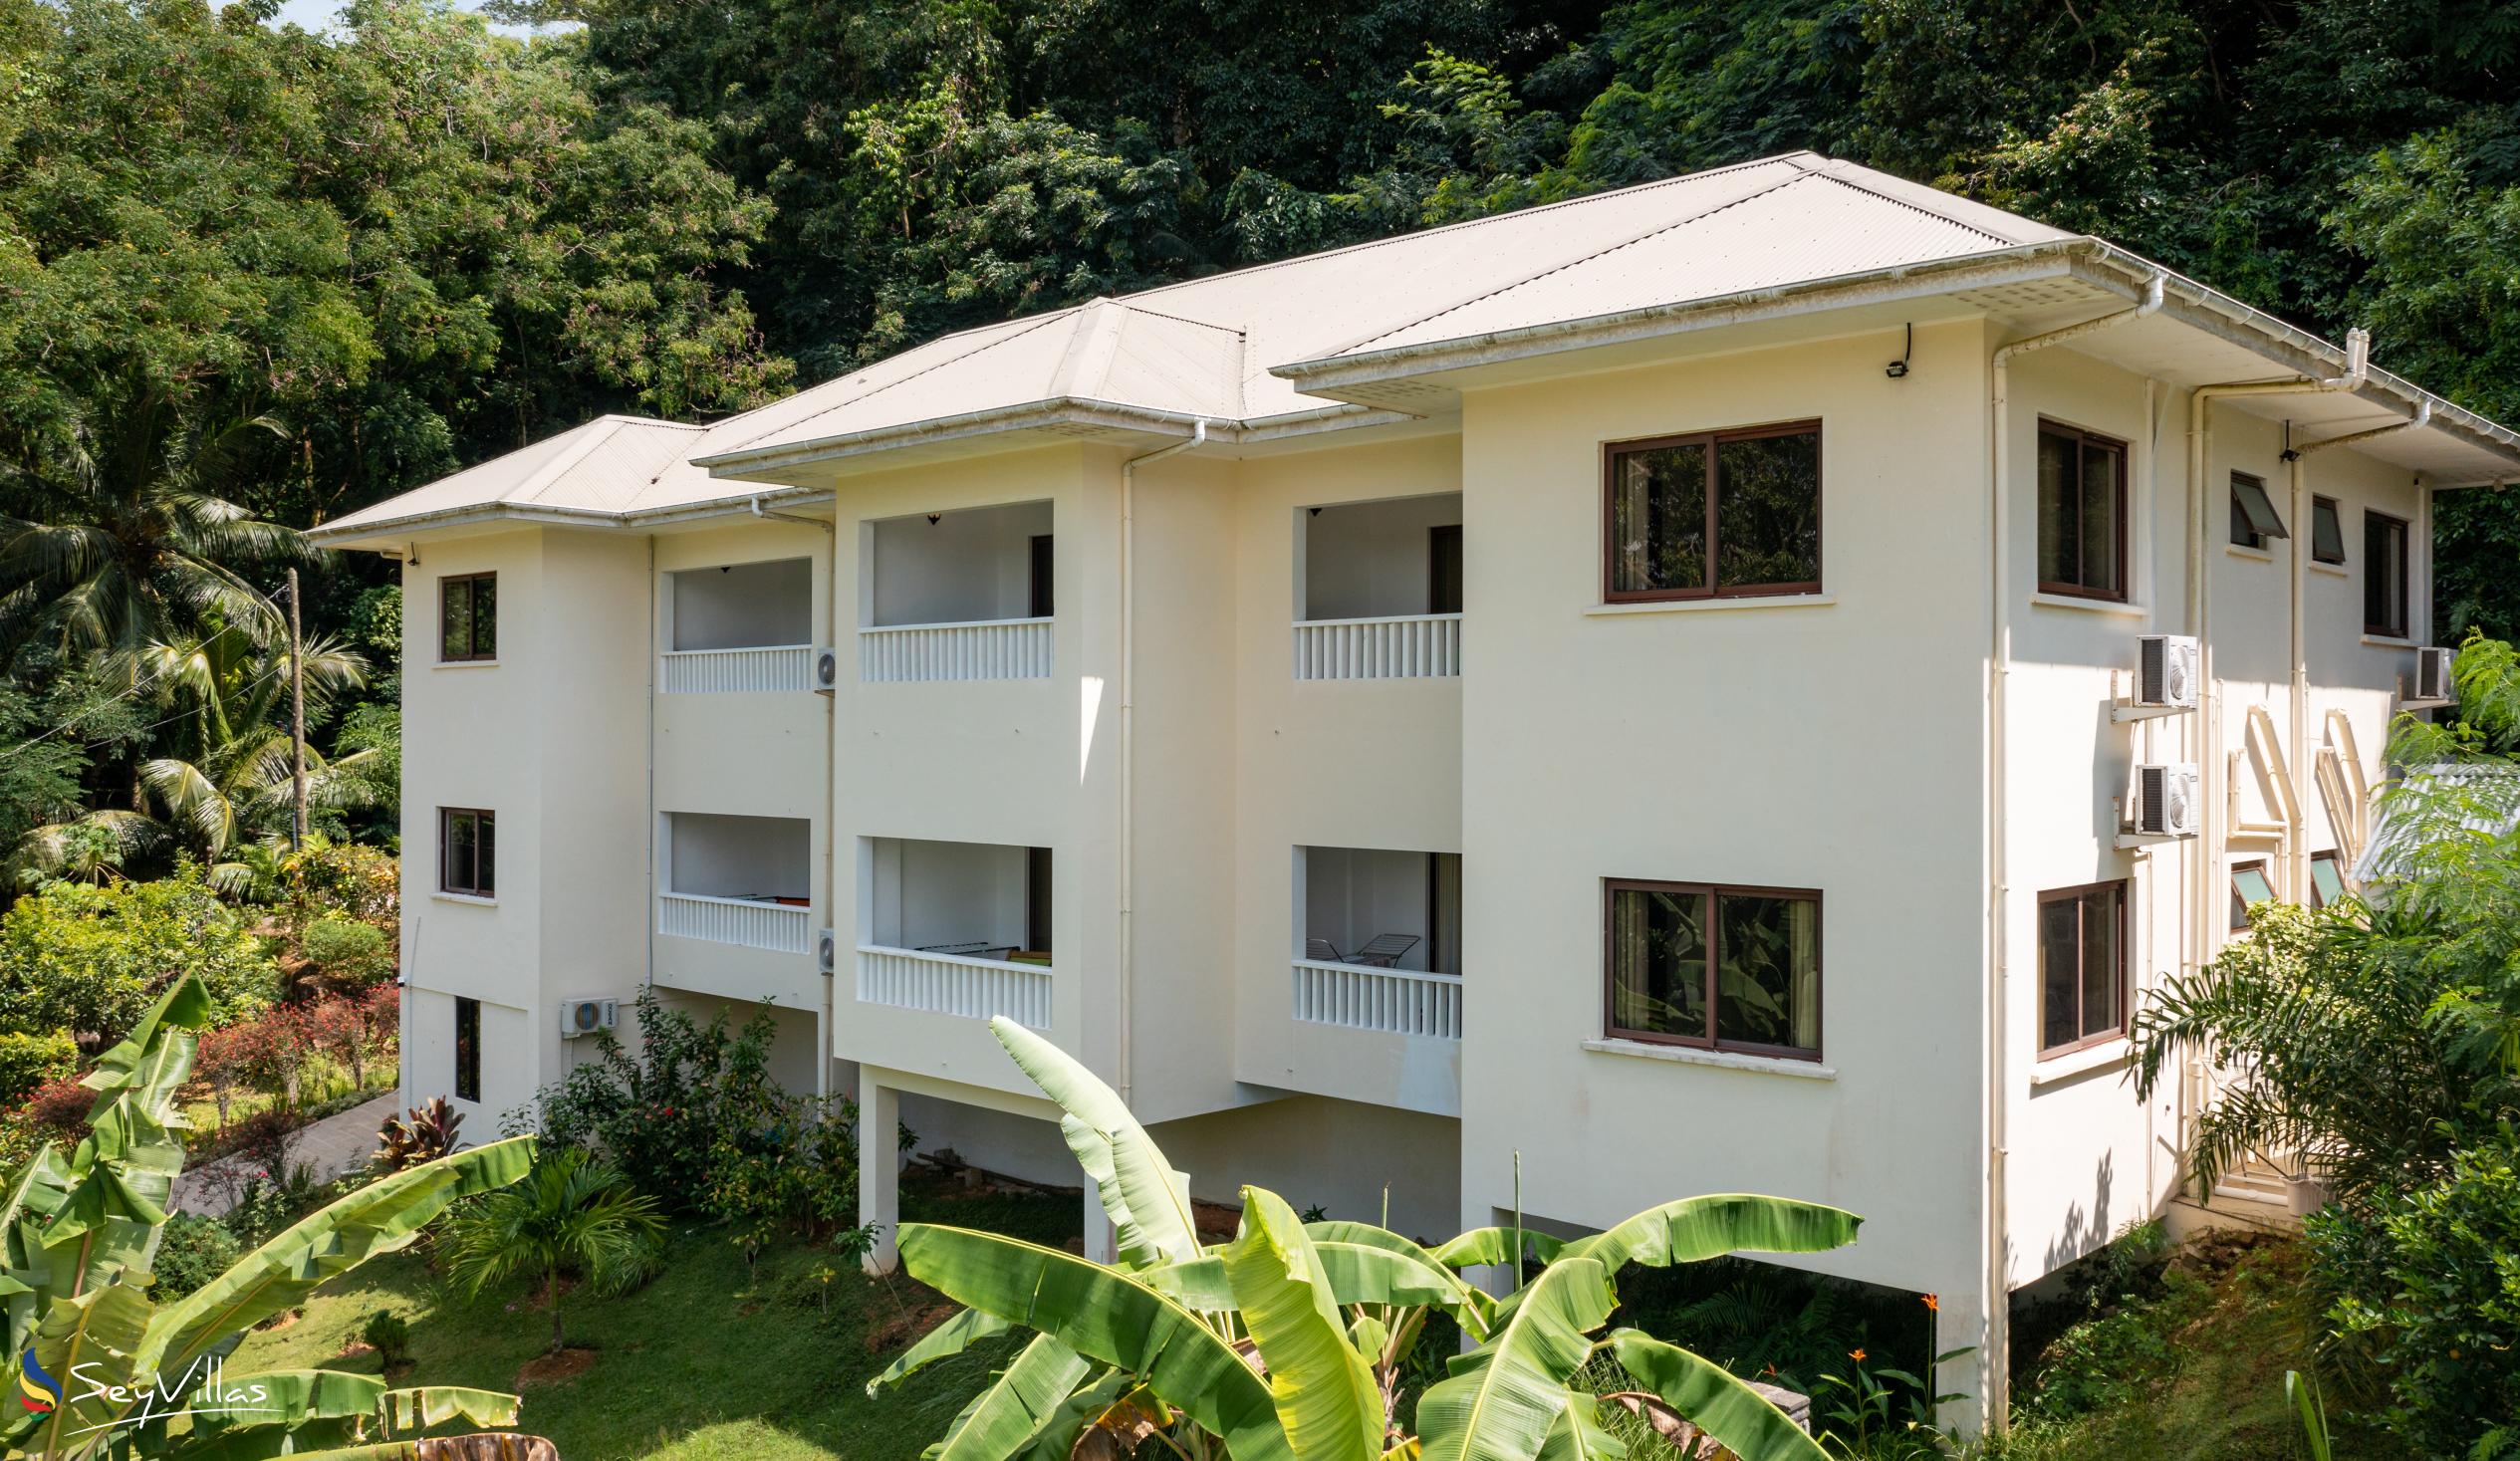 Photo 50: Kanasuk Self Catering Apartments - Outdoor area - Mahé (Seychelles)